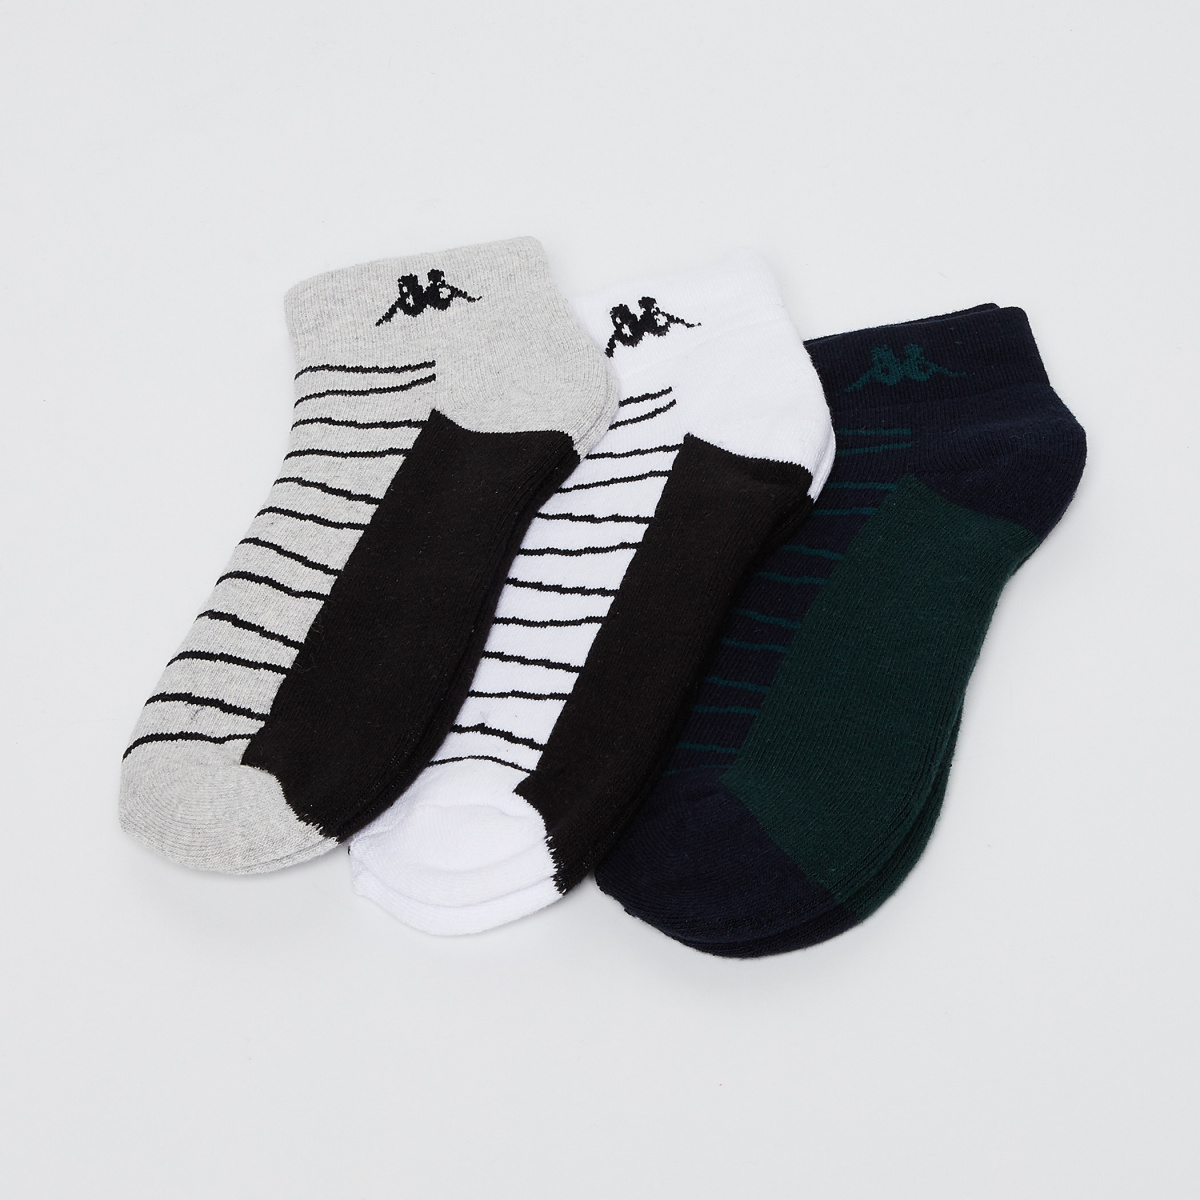 KAPPA Jacquard Stripes Ankle Socks- Pack of 3 Pairs